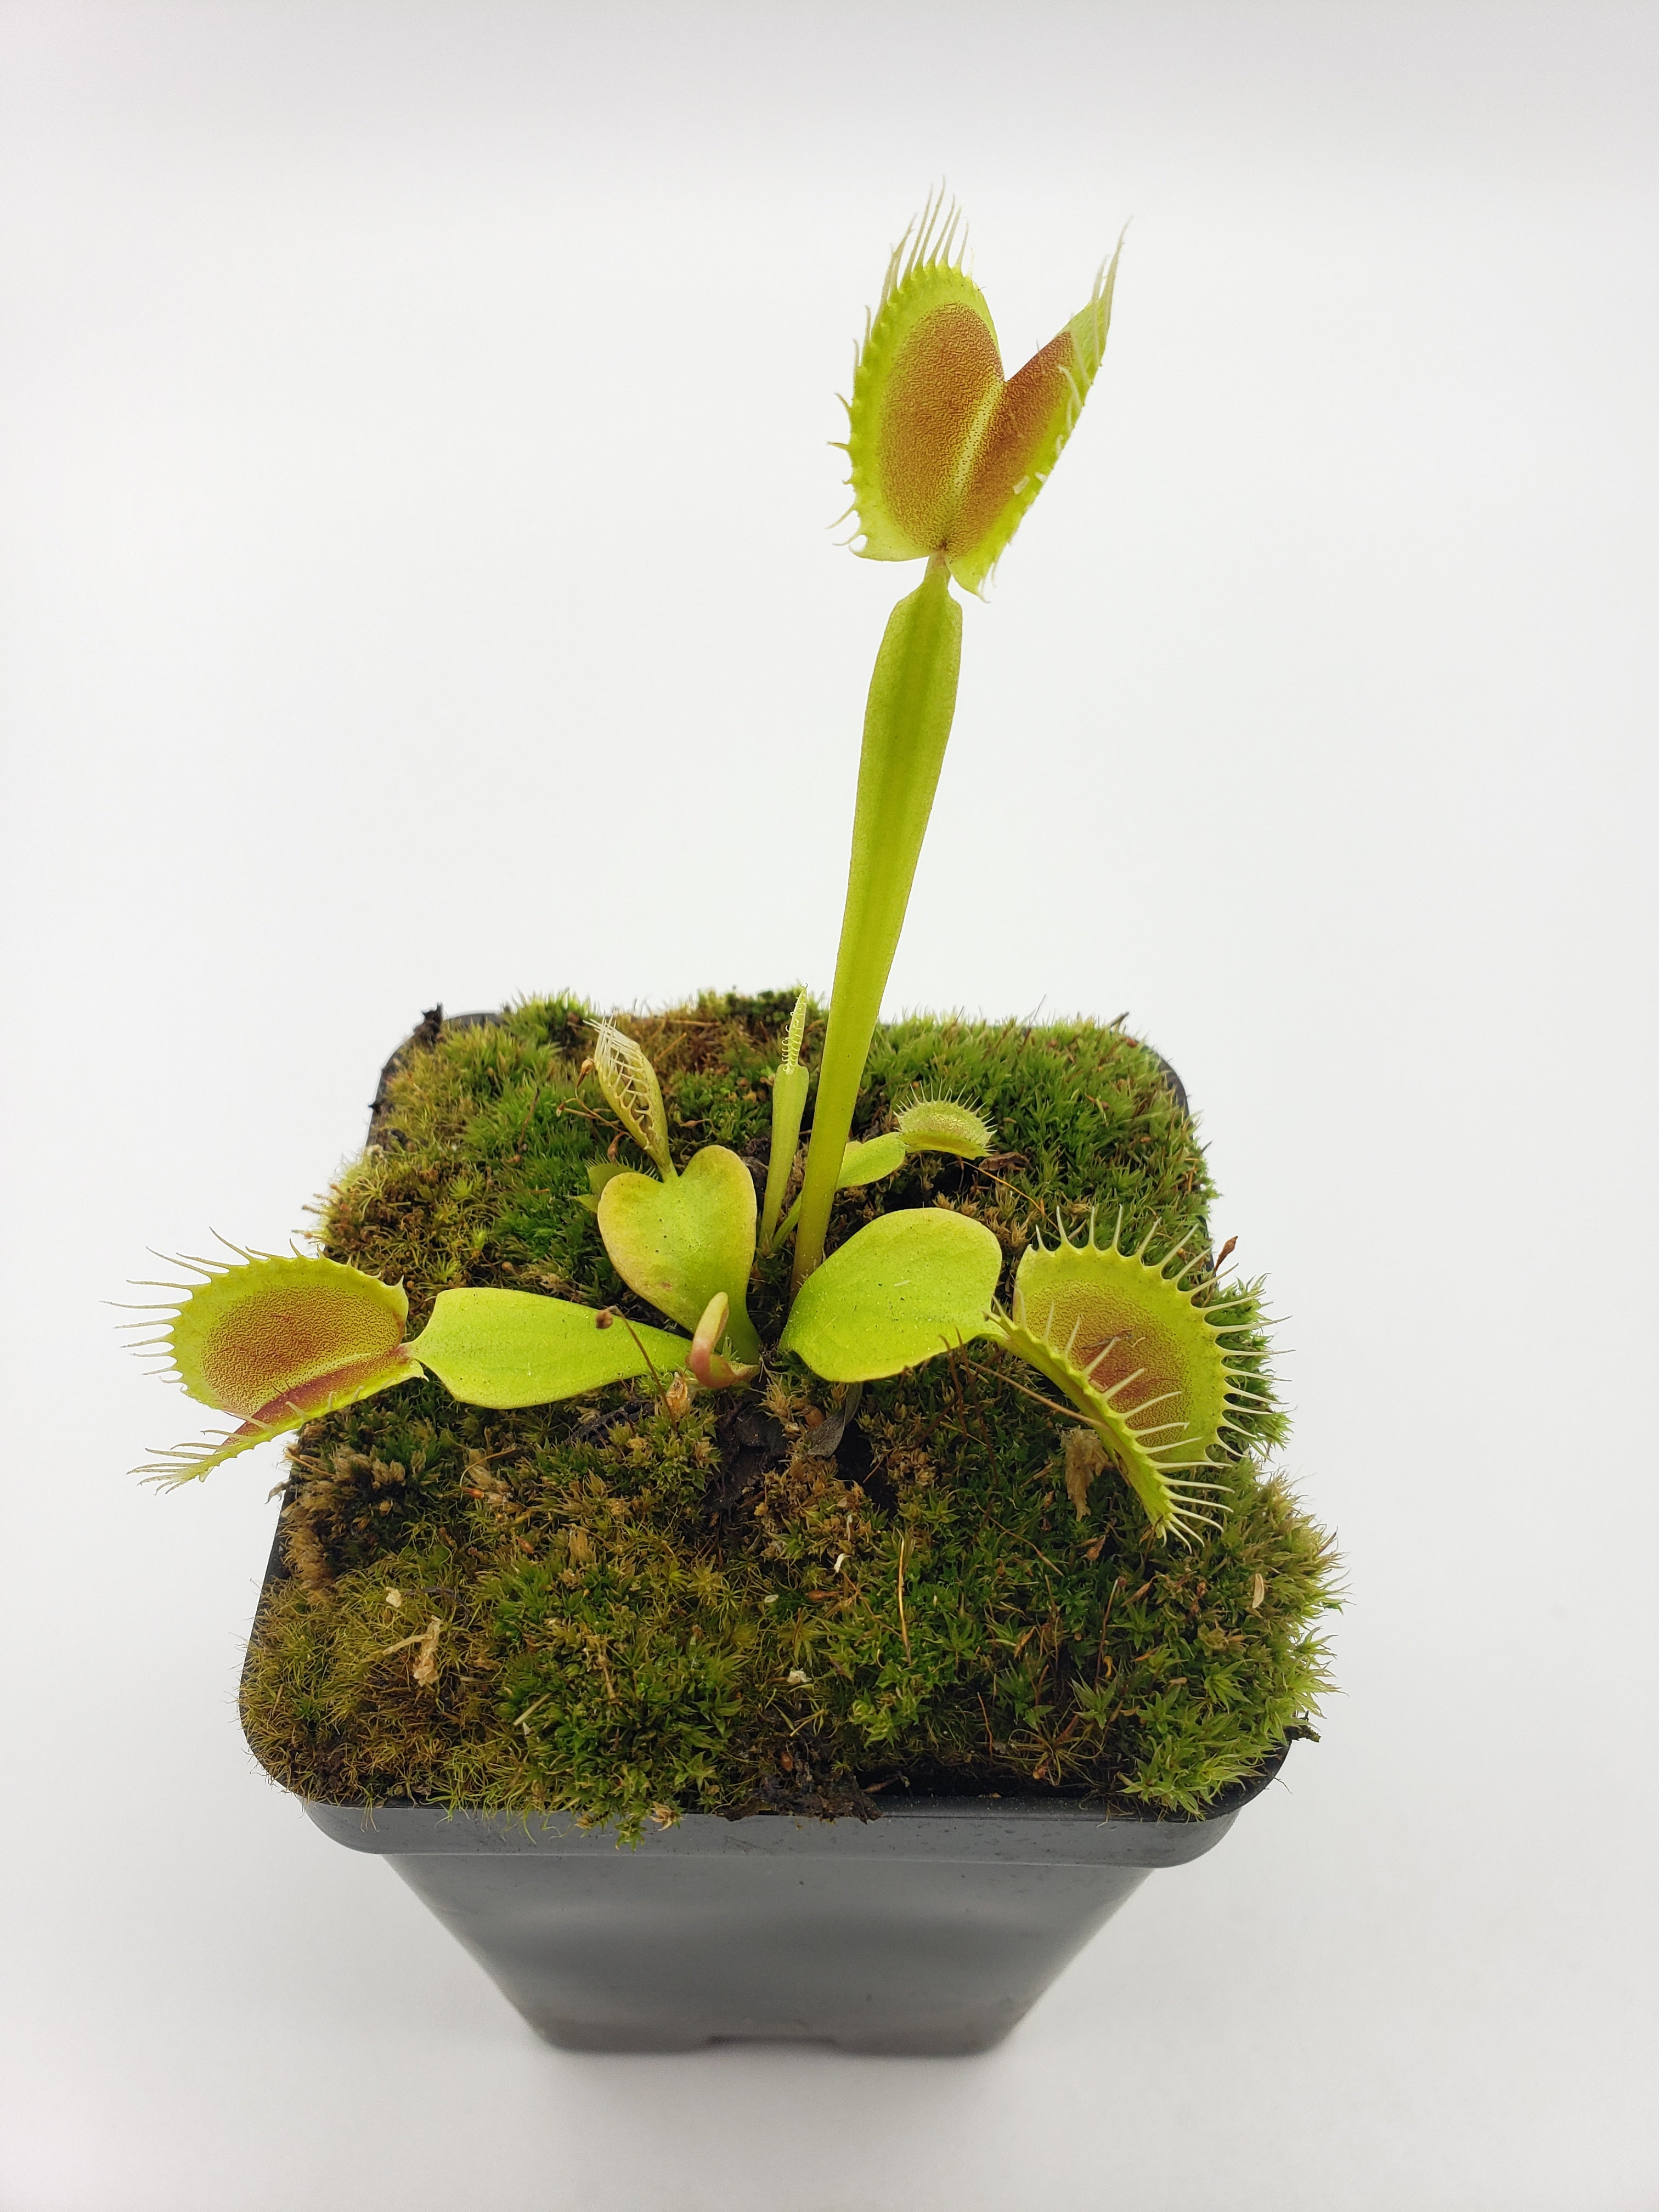 Venus flytrap (Dionaea muscipula) "Pinnacle" - Rainbow Carnivorous Plants LLC